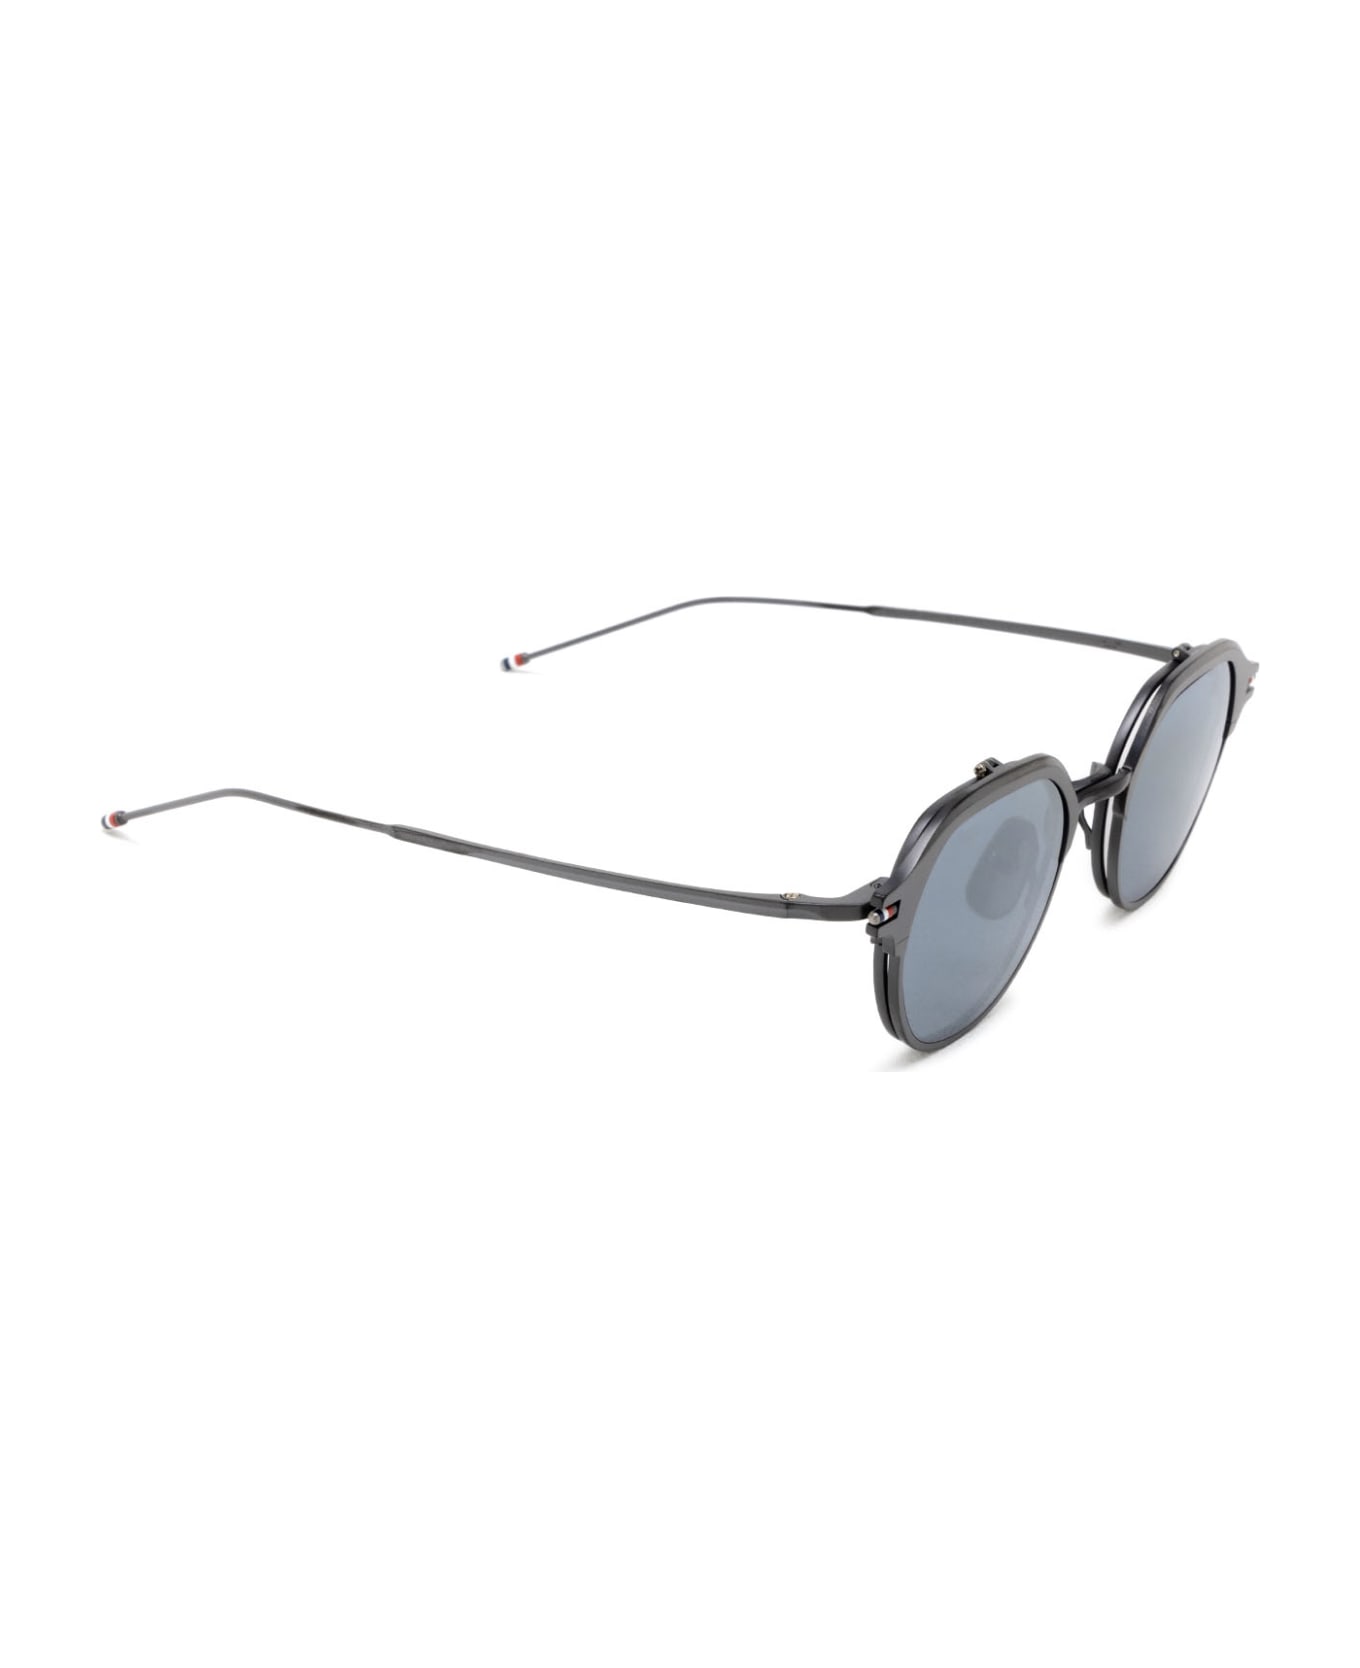 Thom Browne Ues812a Black / Charcoal Sunglasses - Black / Charcoal